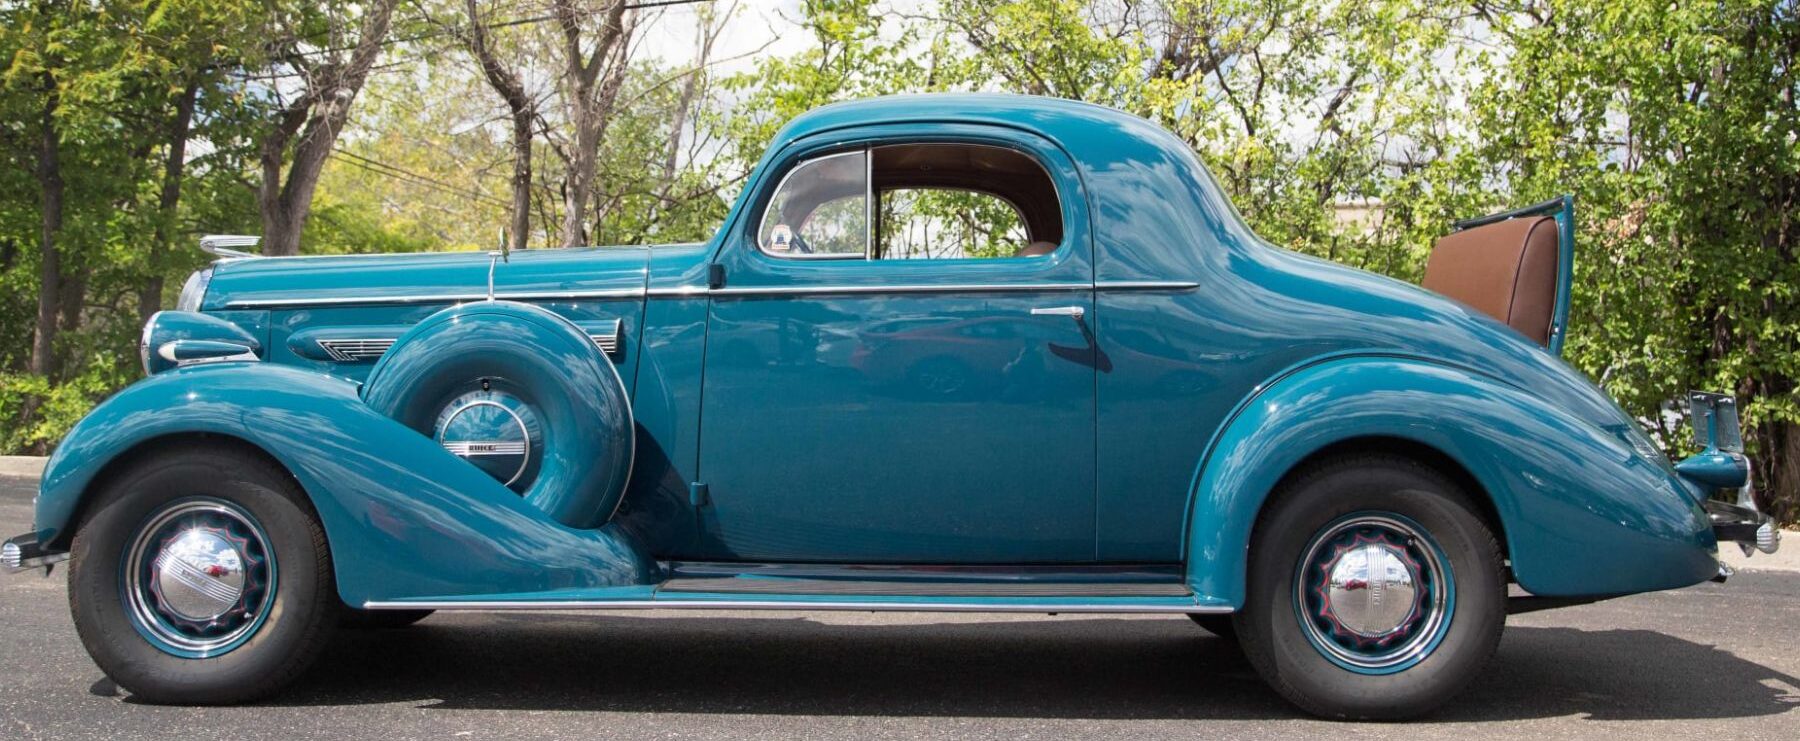 Buick Century 1936 года, давно забытый дедушка американского маслкара